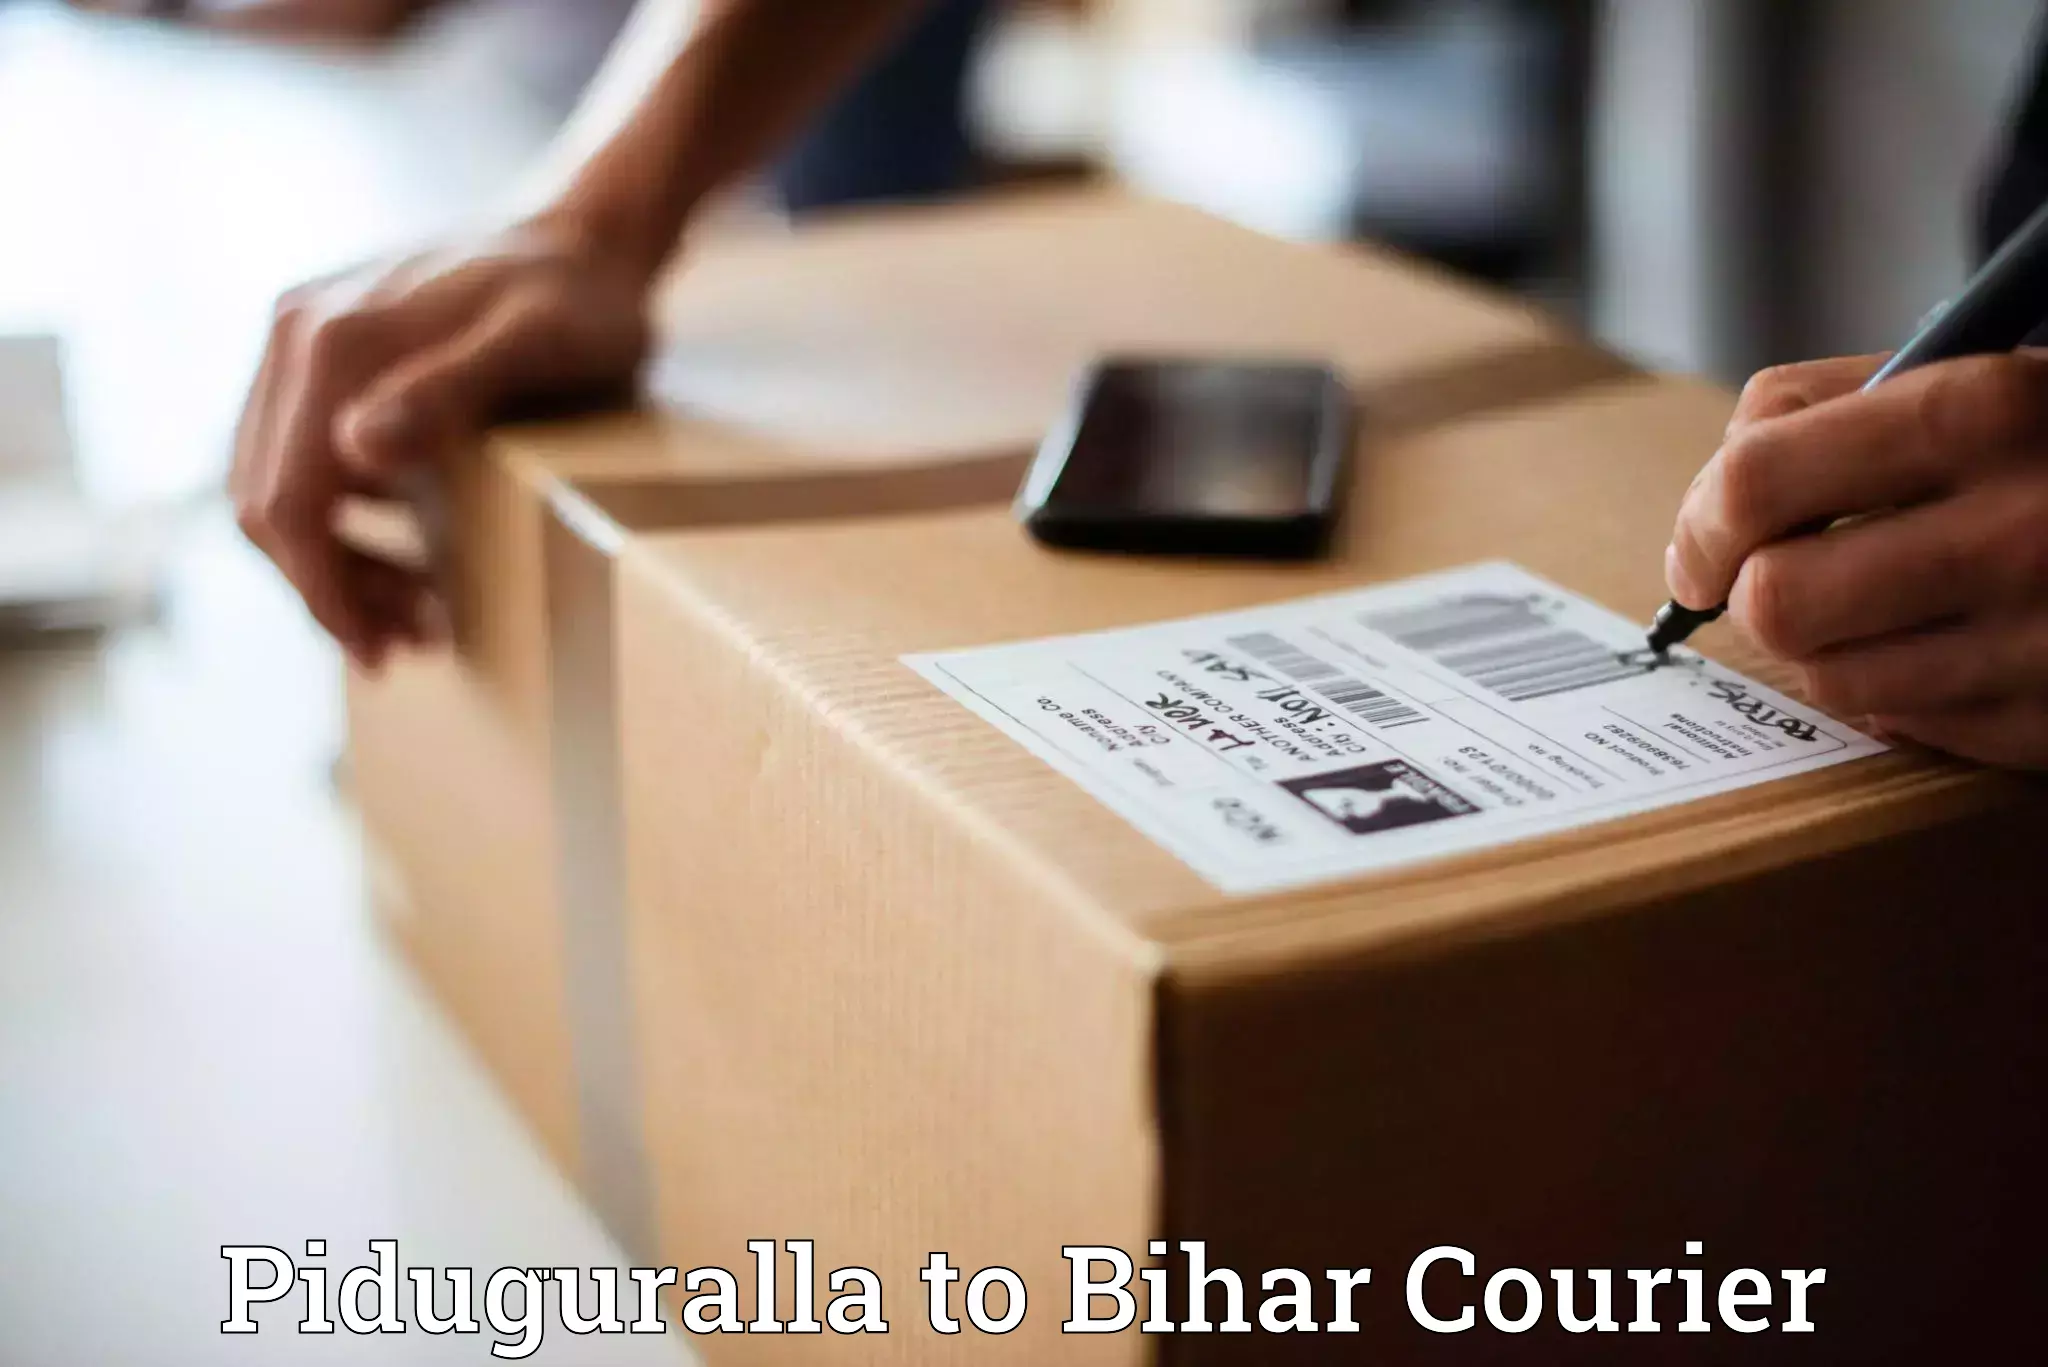 Courier app Piduguralla to Bihar